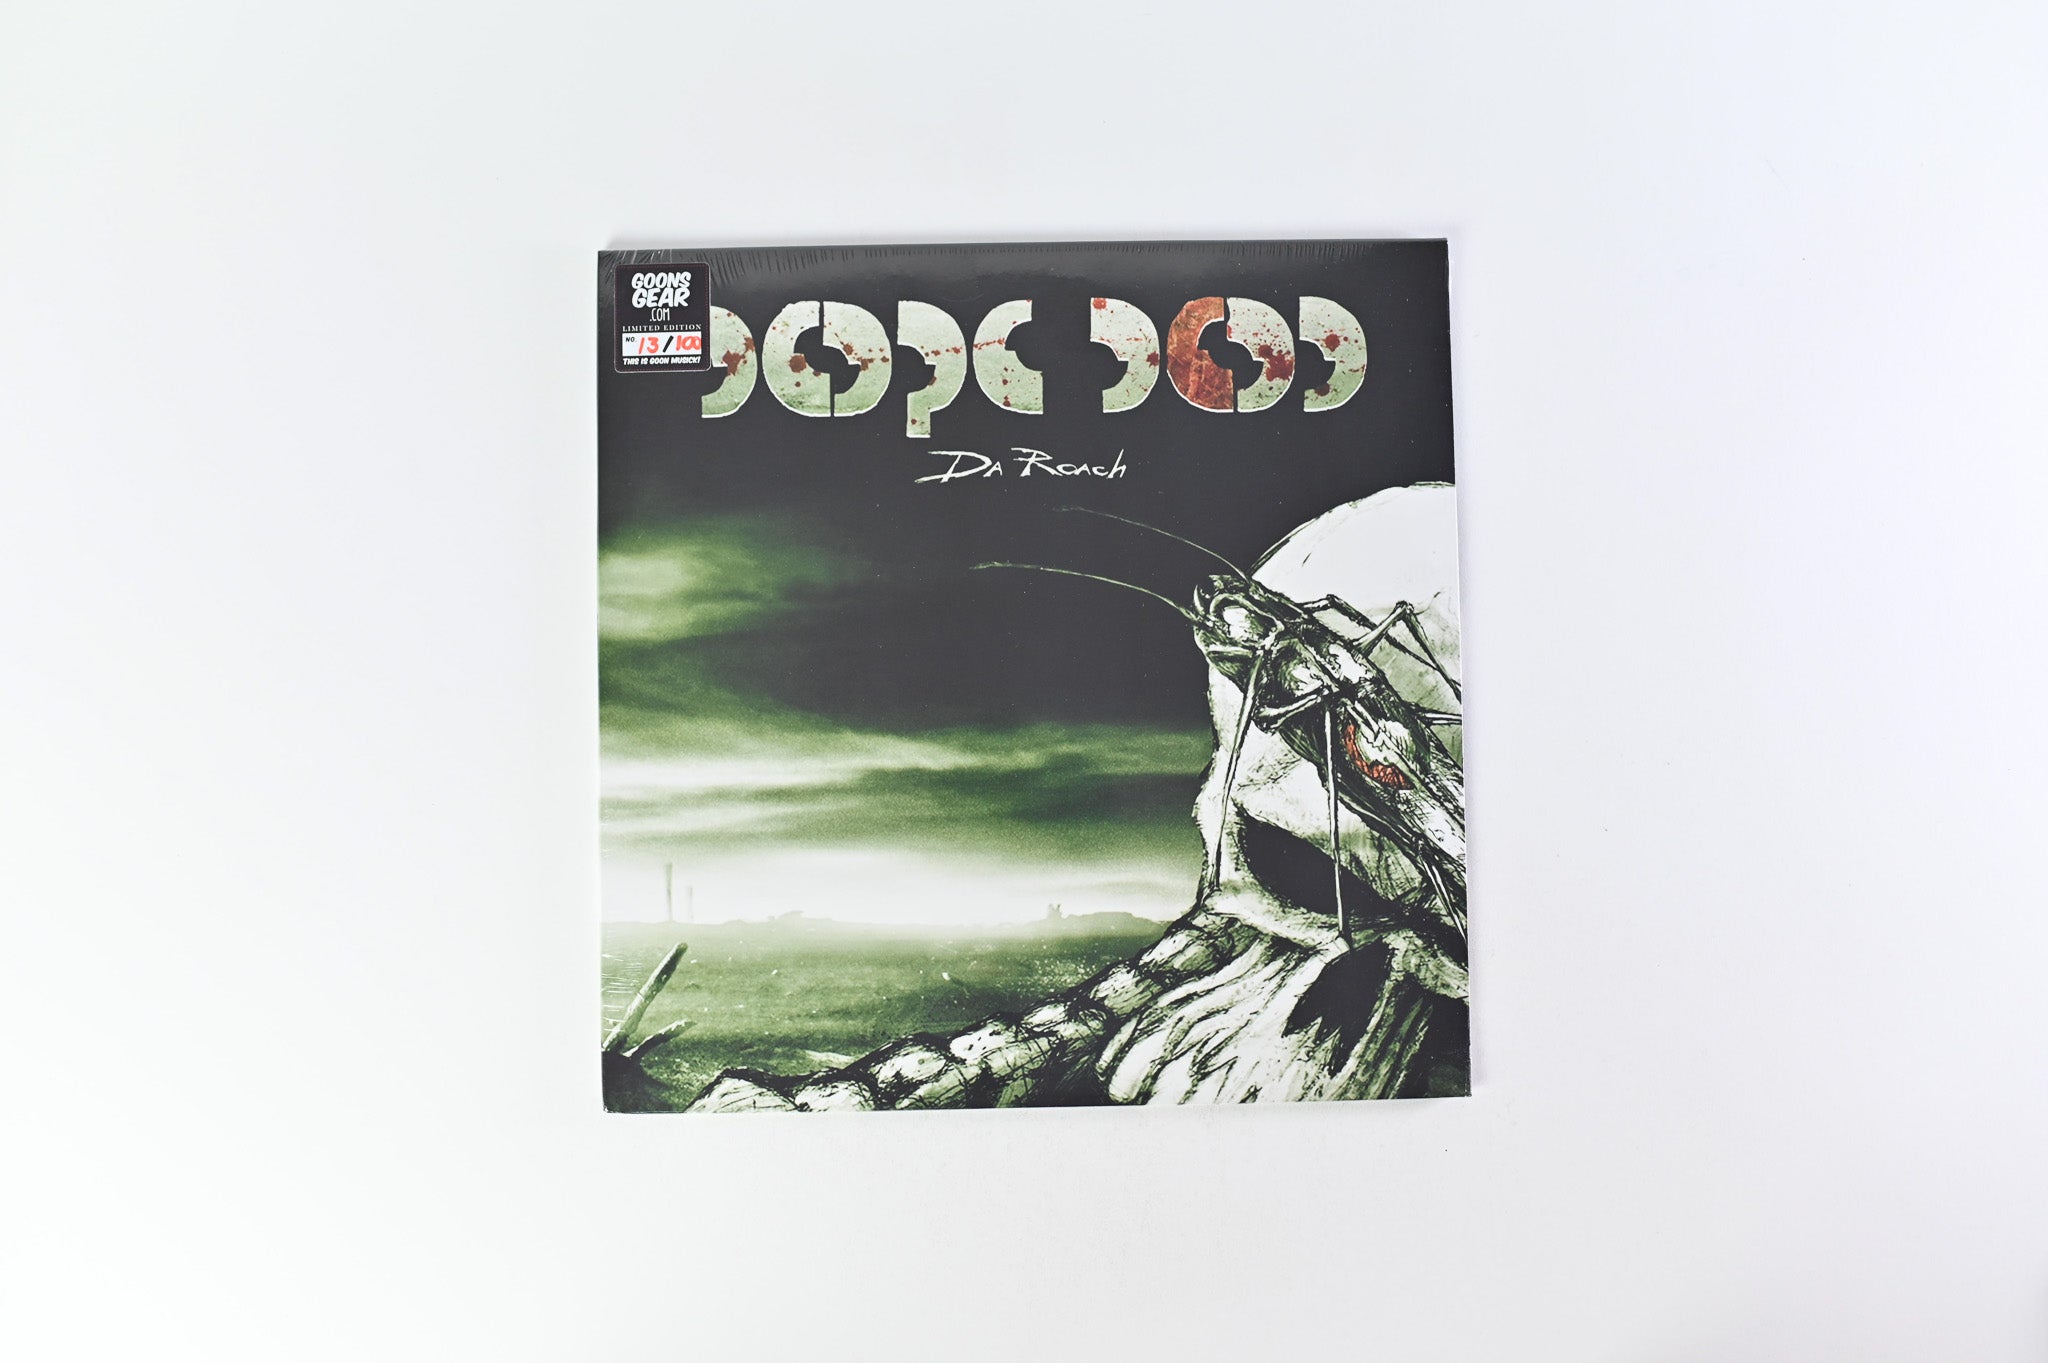 Dope D.O.D. - Da Roach on Goon MuSick Ltd Green Vinyl Reissue Sealed